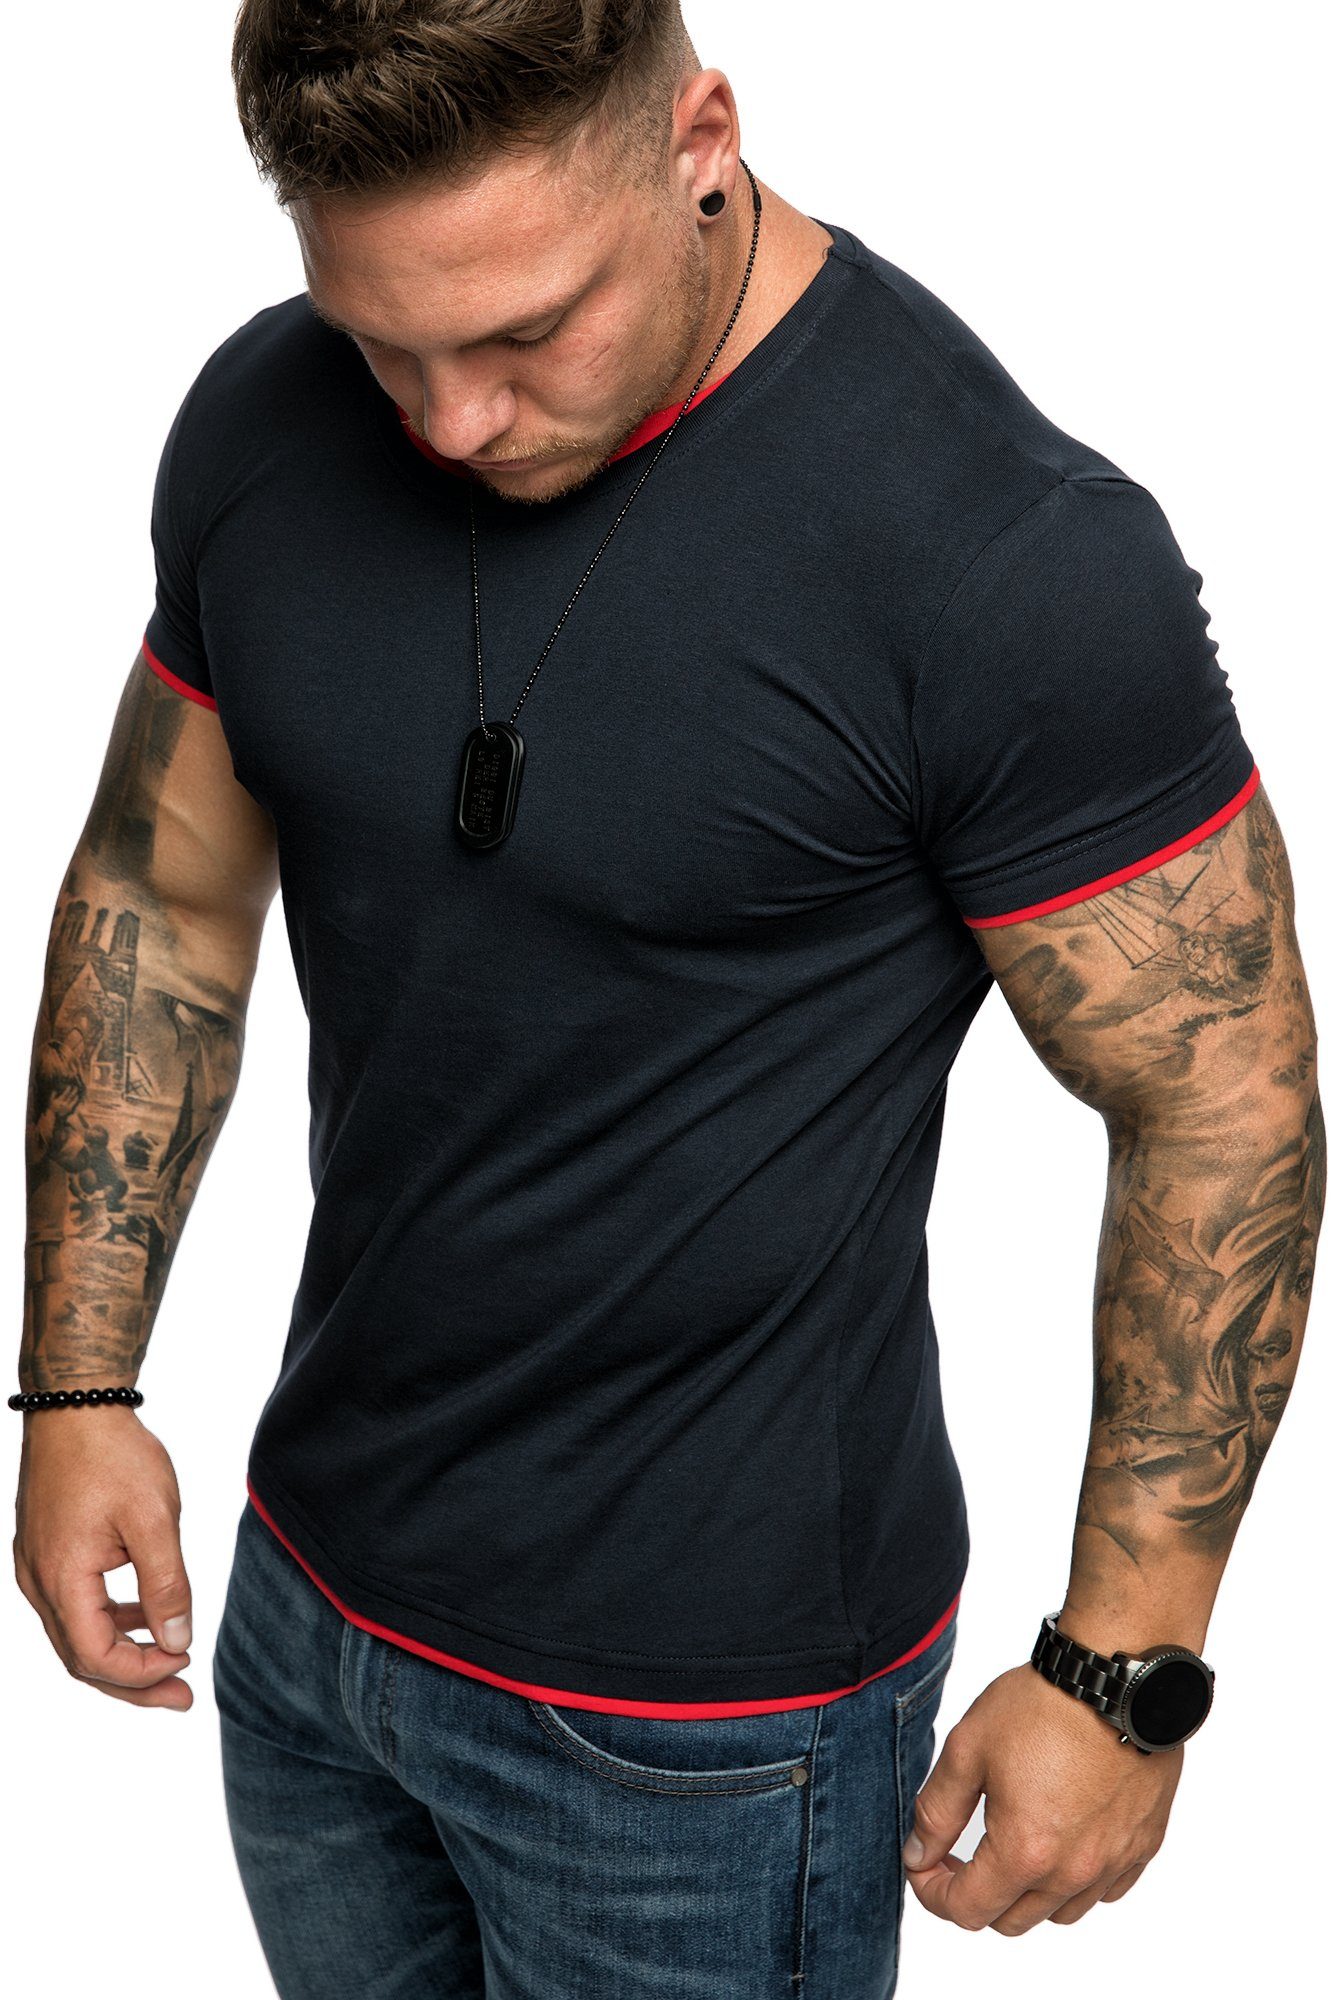 Amaci&Sons Rundhalsausschnitt LAKEWOOD mit T-Shirt Navyblau/Rot Slim-Fit Herren Farbig Doppel Shirt Basic